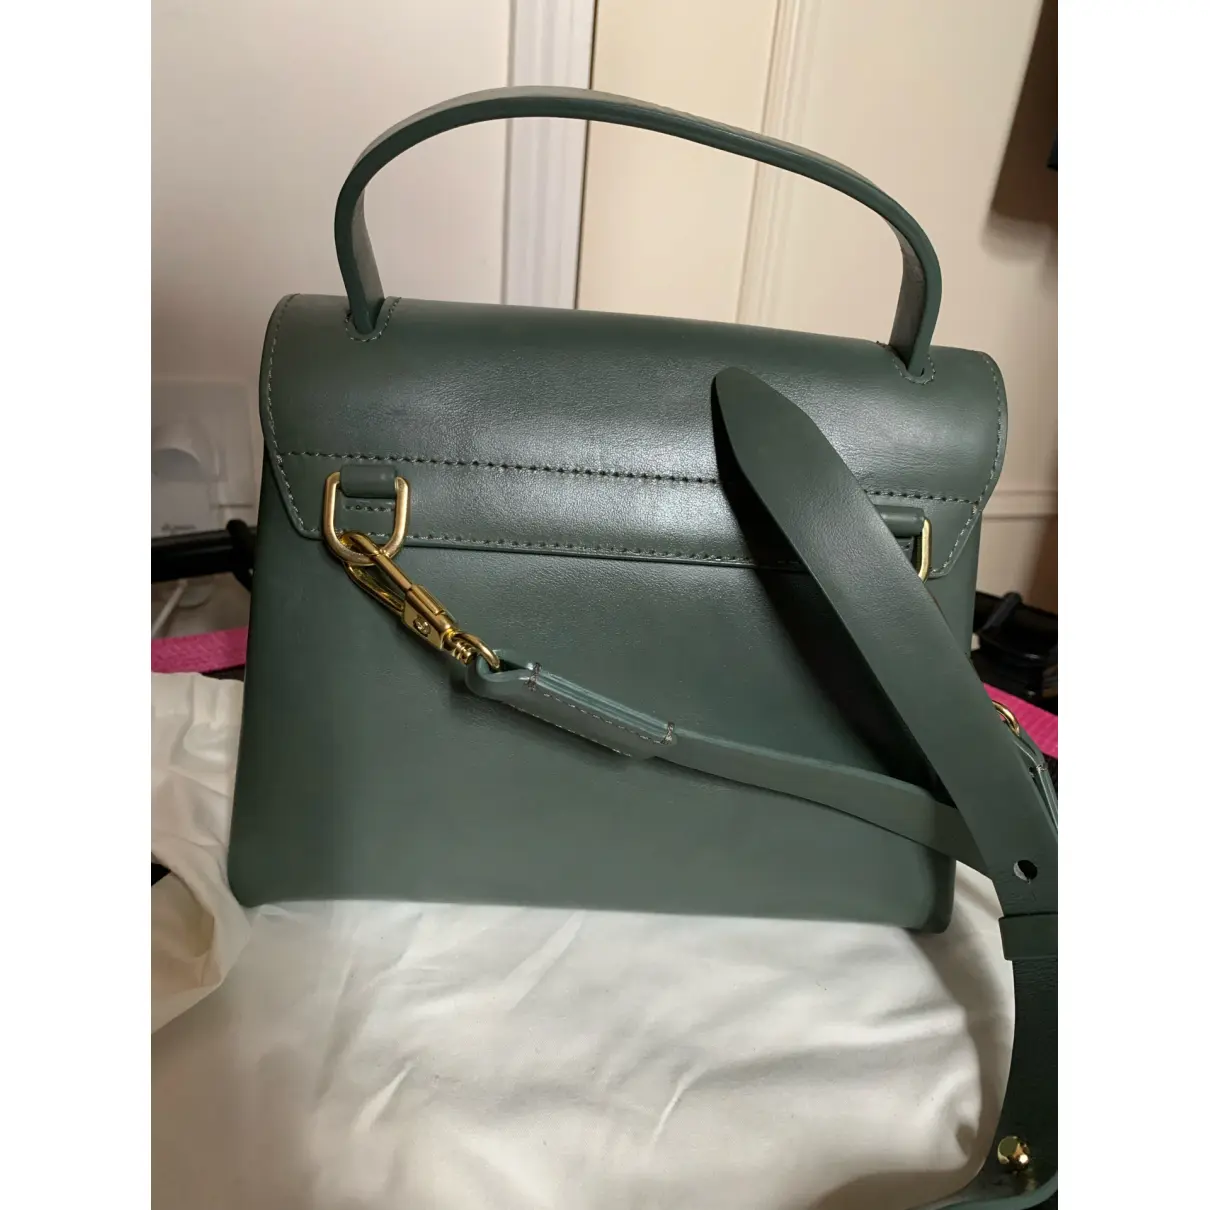 Buy 3.1 Phillip Lim Alix leather satchel online